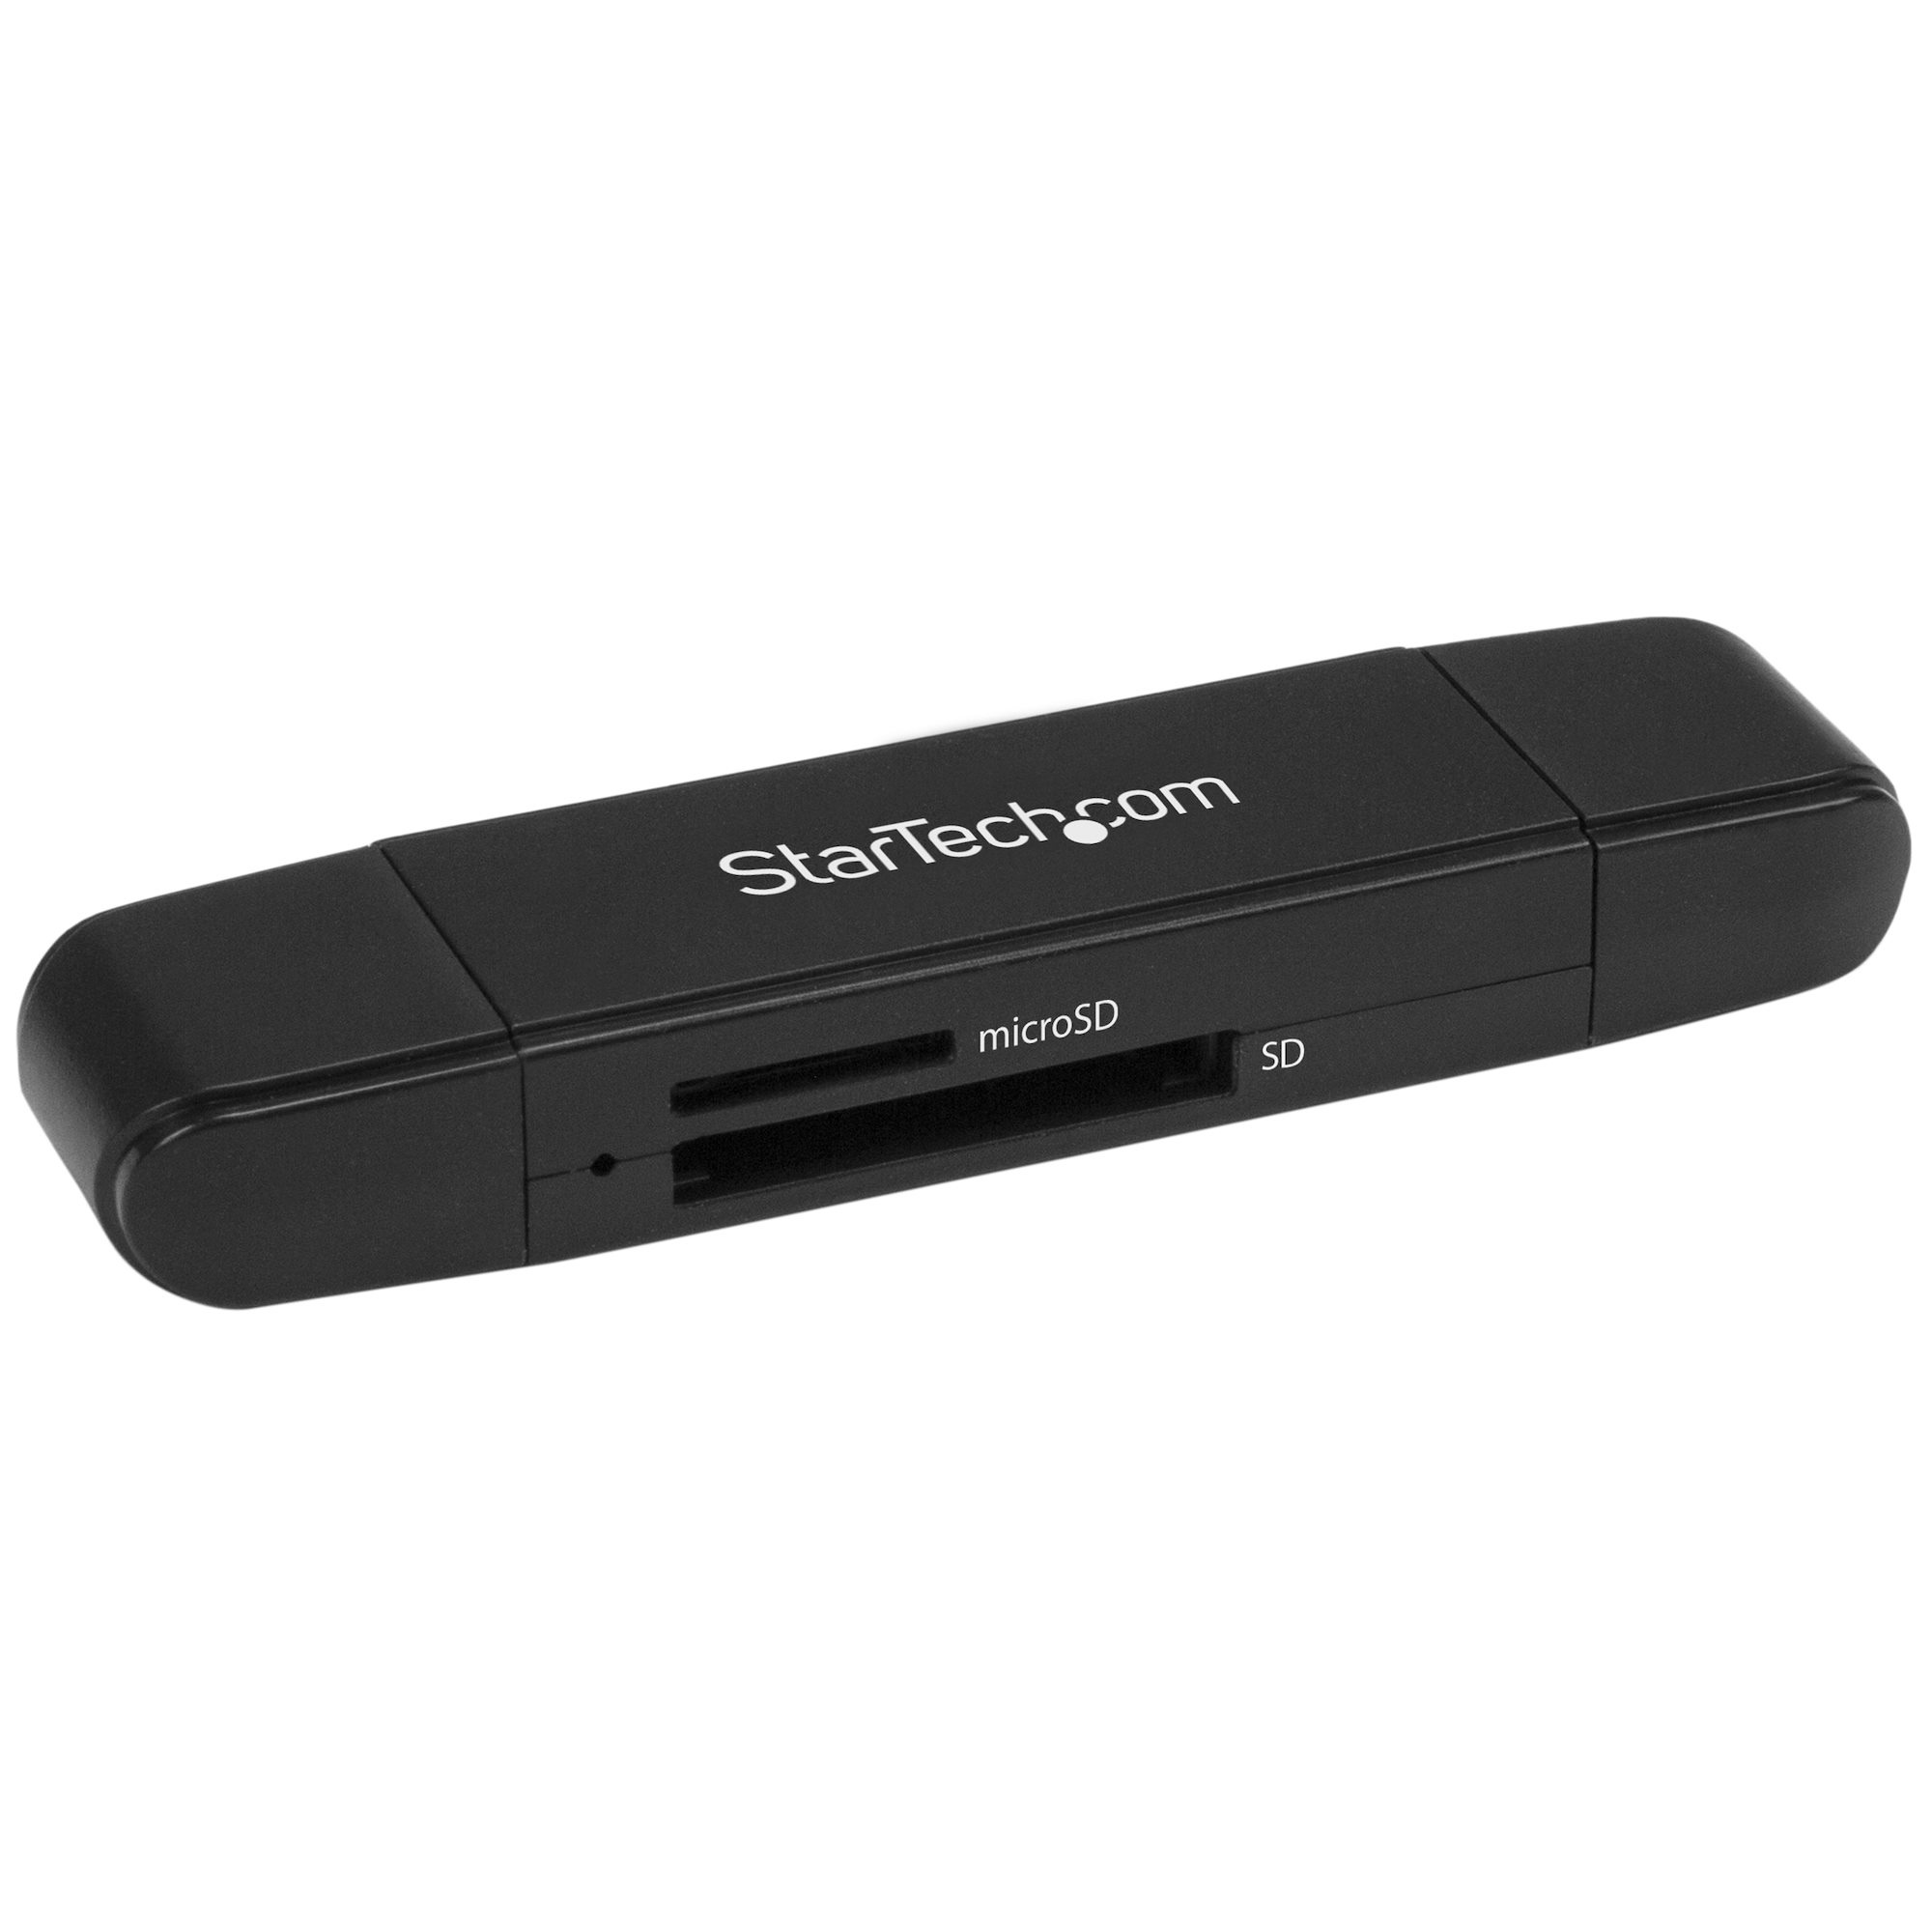 StarTech USB 3.0 SD and microSD Card Reader